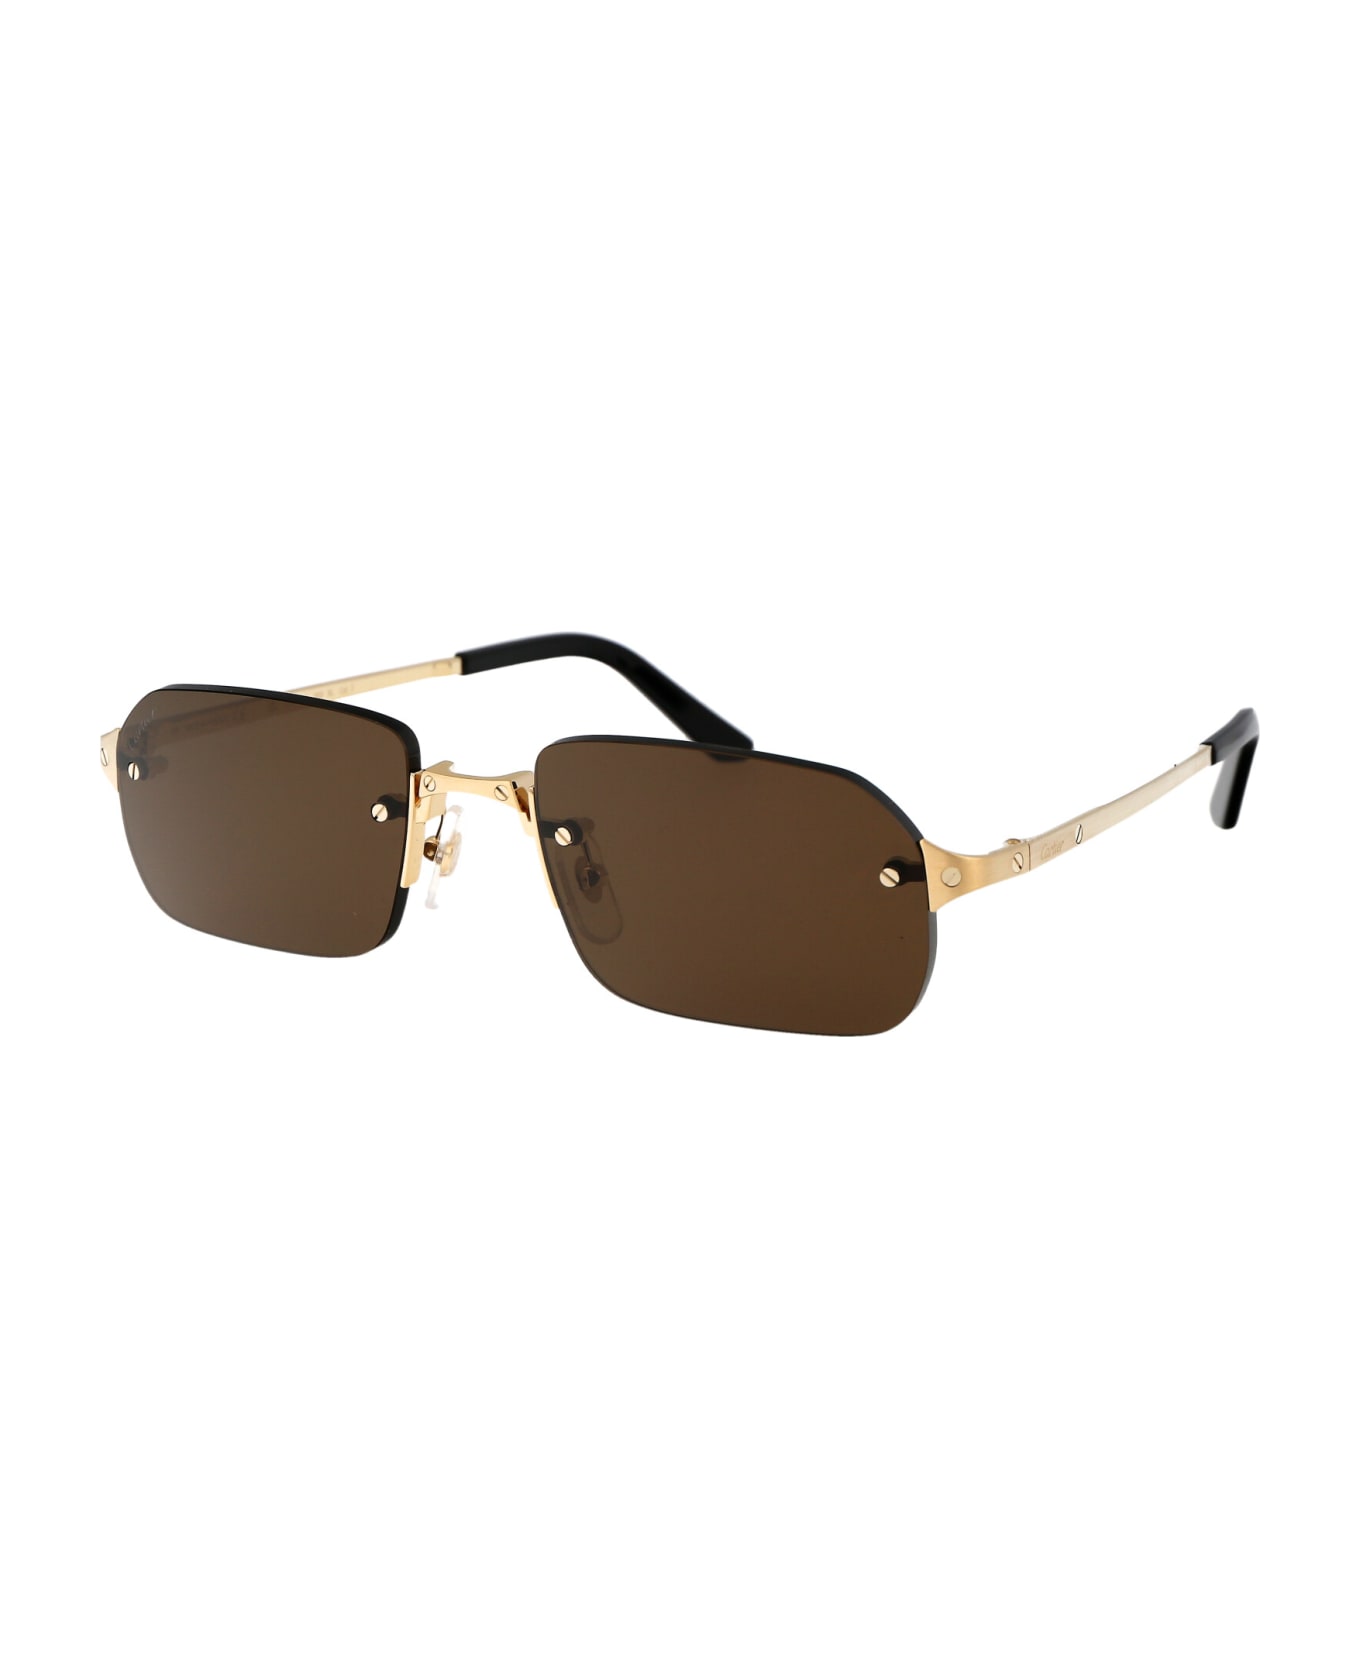 Cartier Eyewear Ct0460s Sunglasses - 002 GOLD GOLD BROWN サングラス